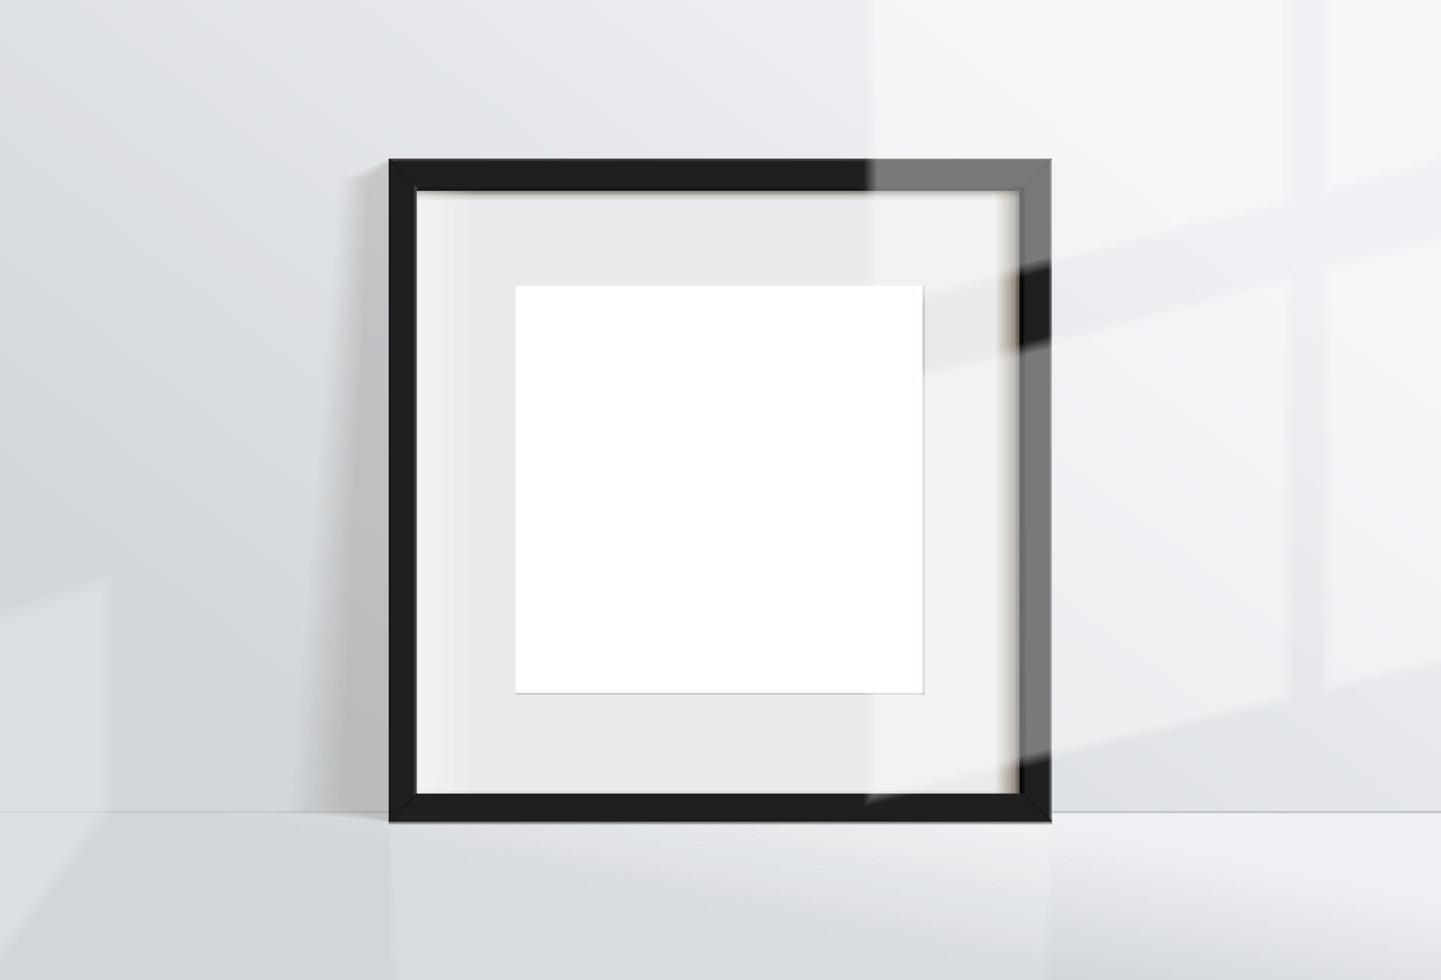 minimale lege vierkante zwarte frame foto mock up opknoping op witte muur achtergrond vector